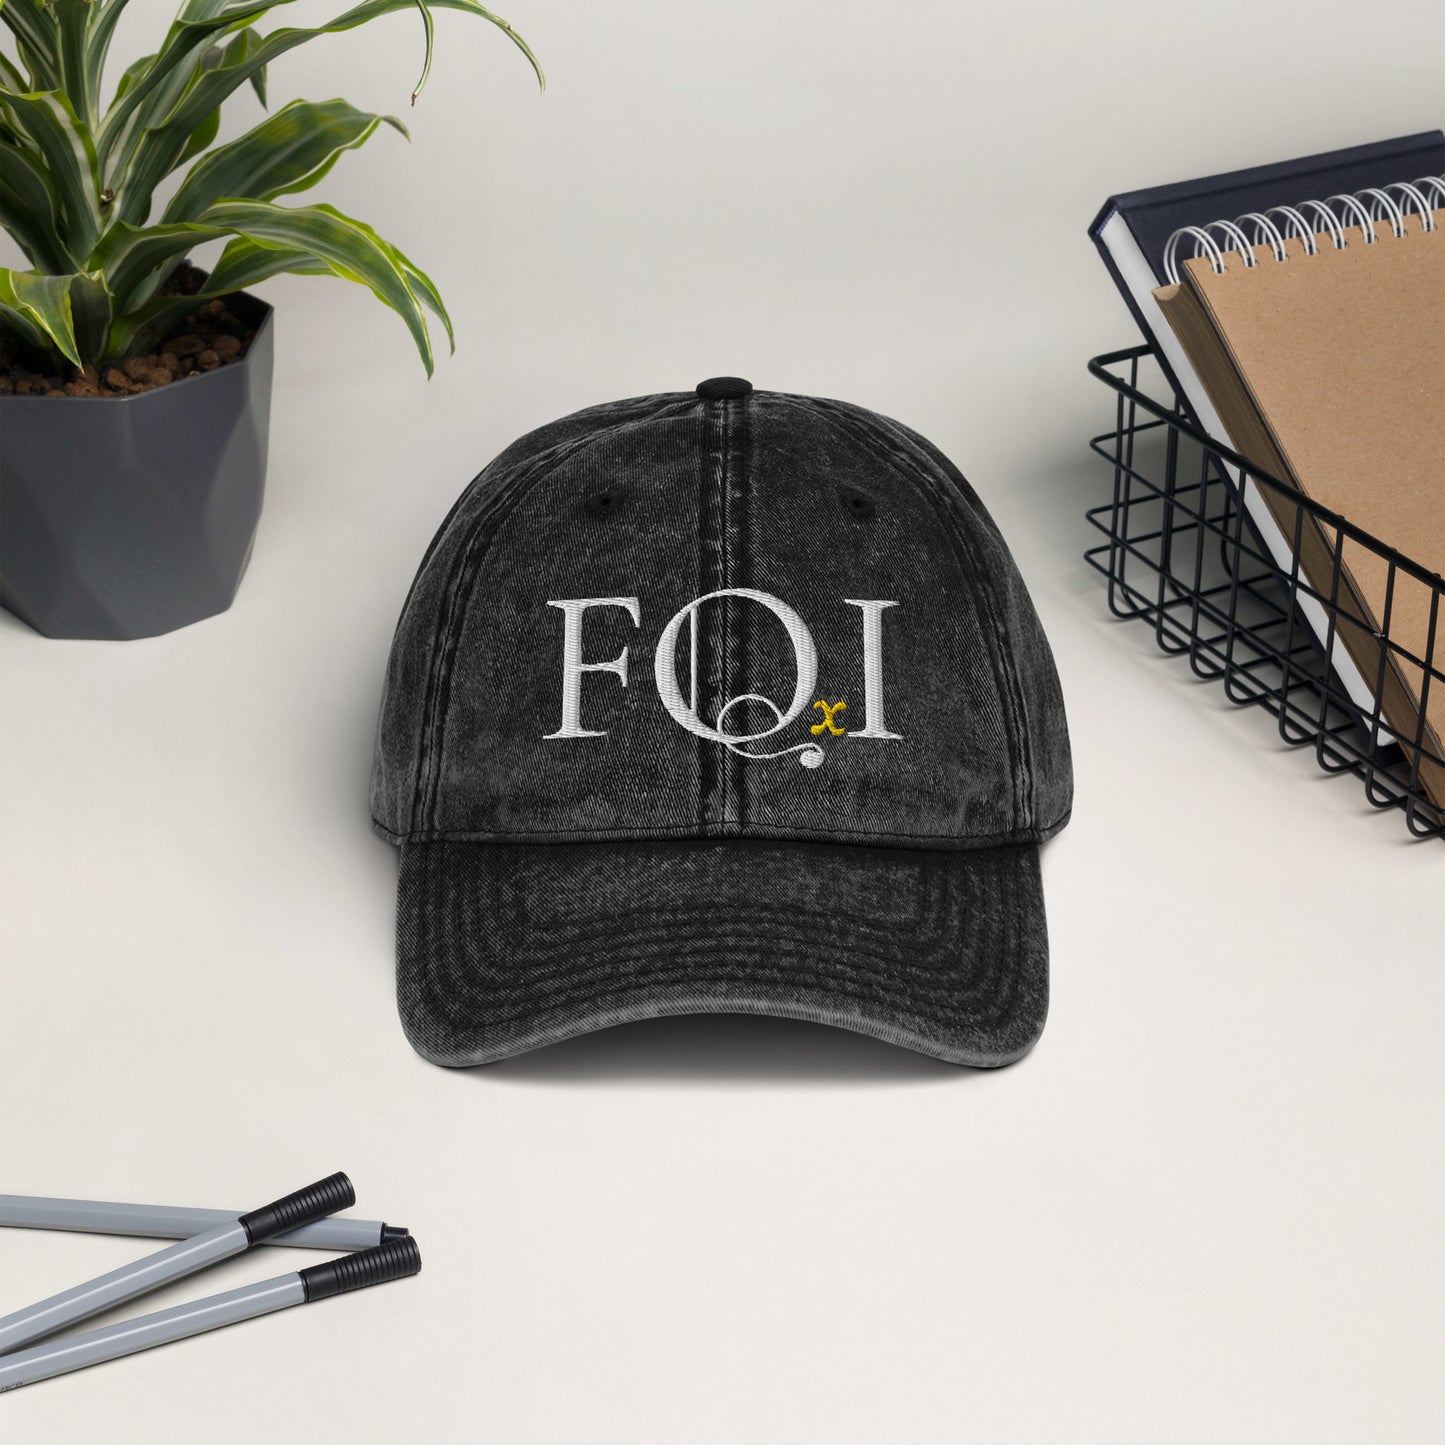 FQxI vintage-look cotton twill hat